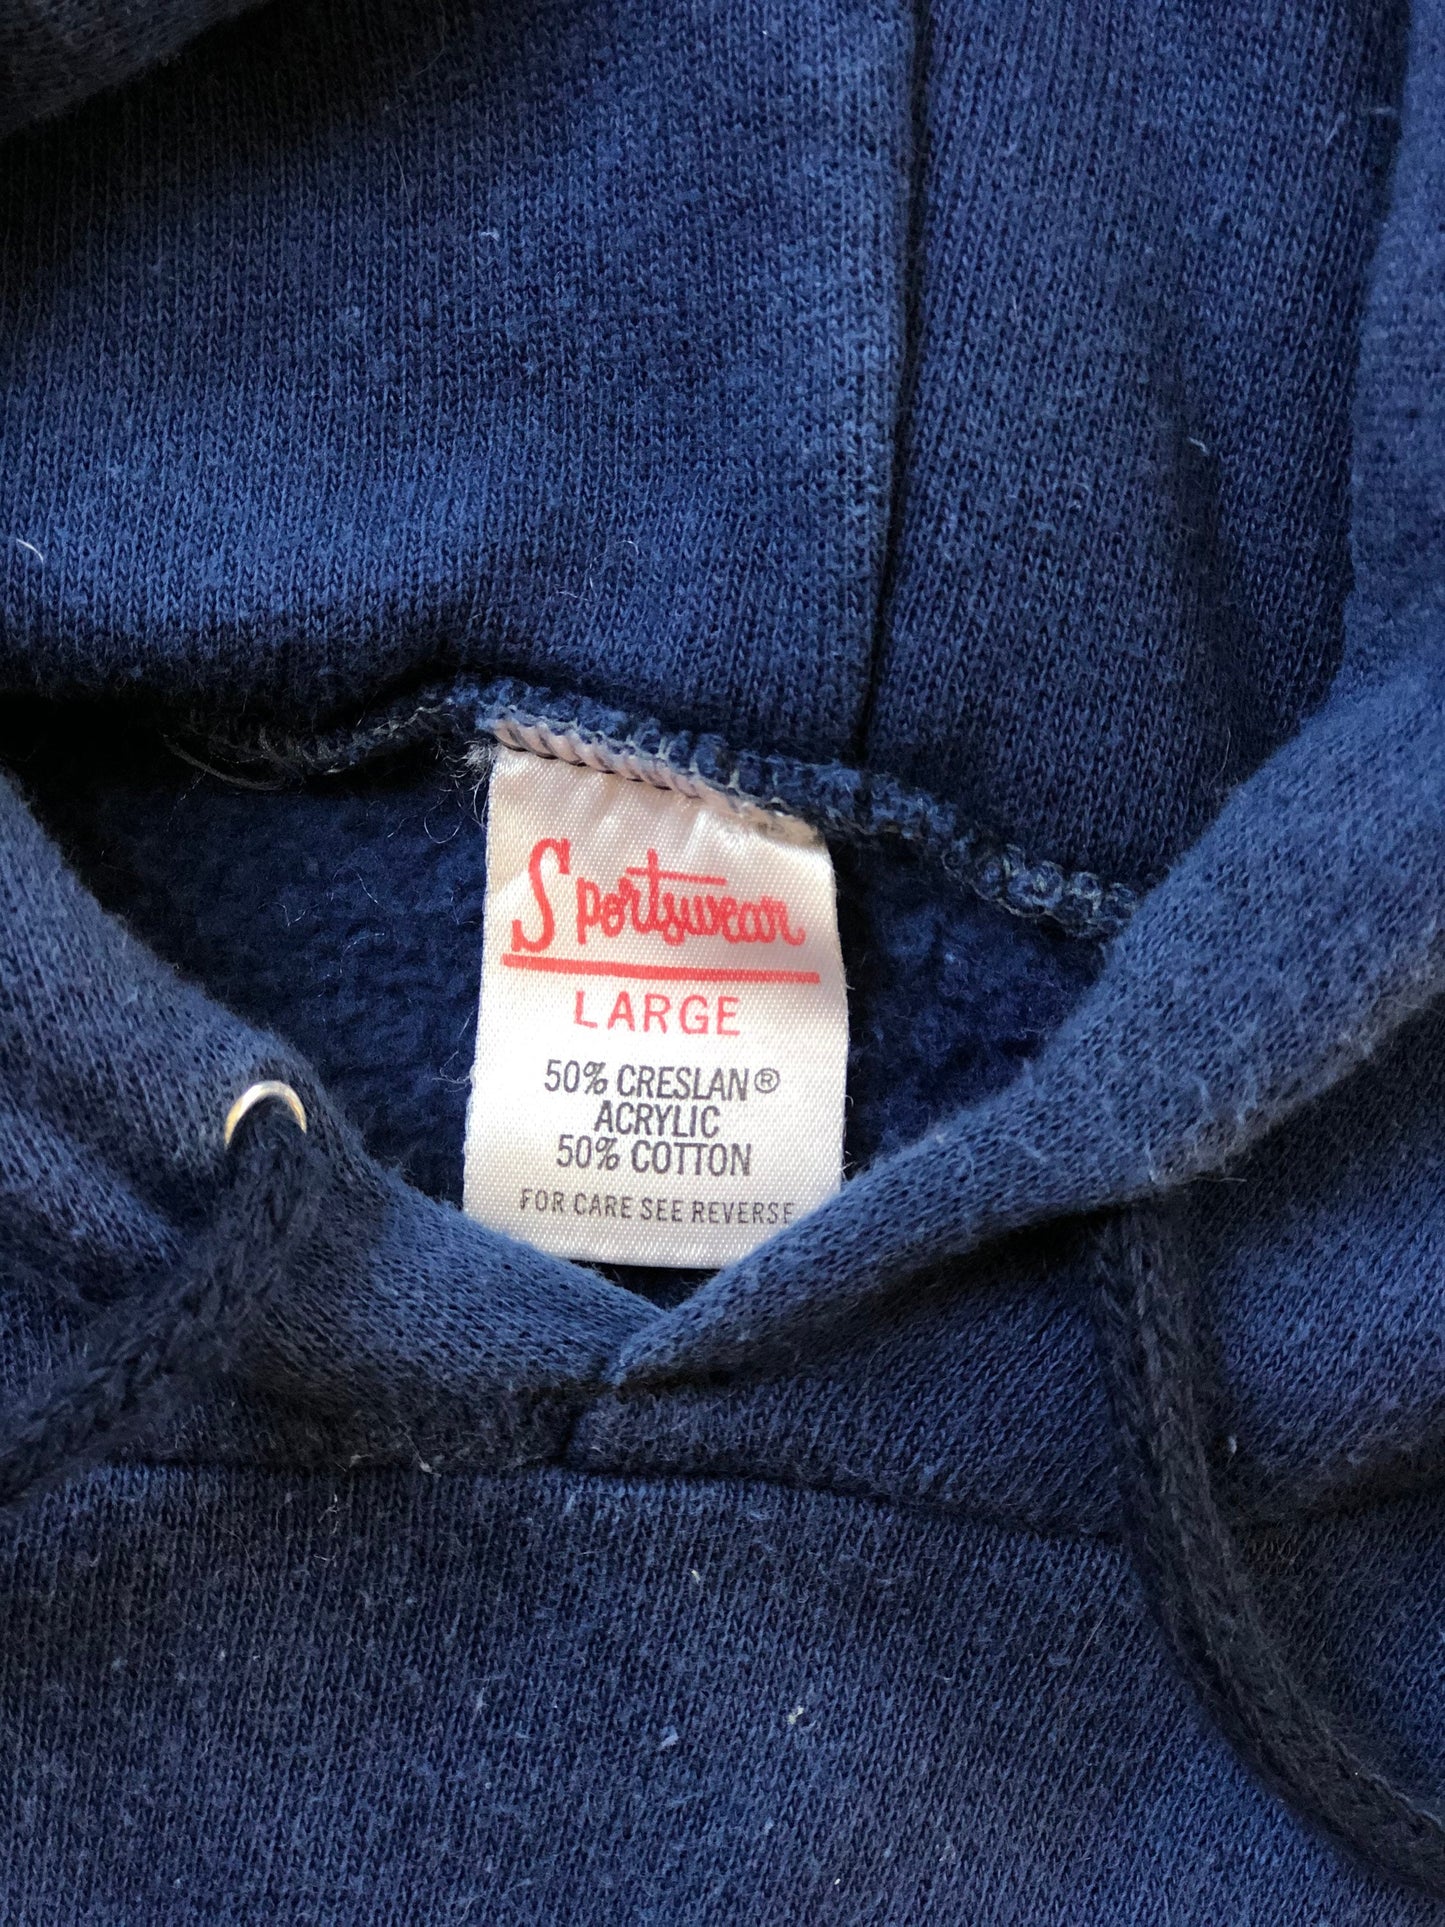 1984 Team USA Olympics Sportswear Super Soft 50/50 Hooded Sweatshirt Size Large